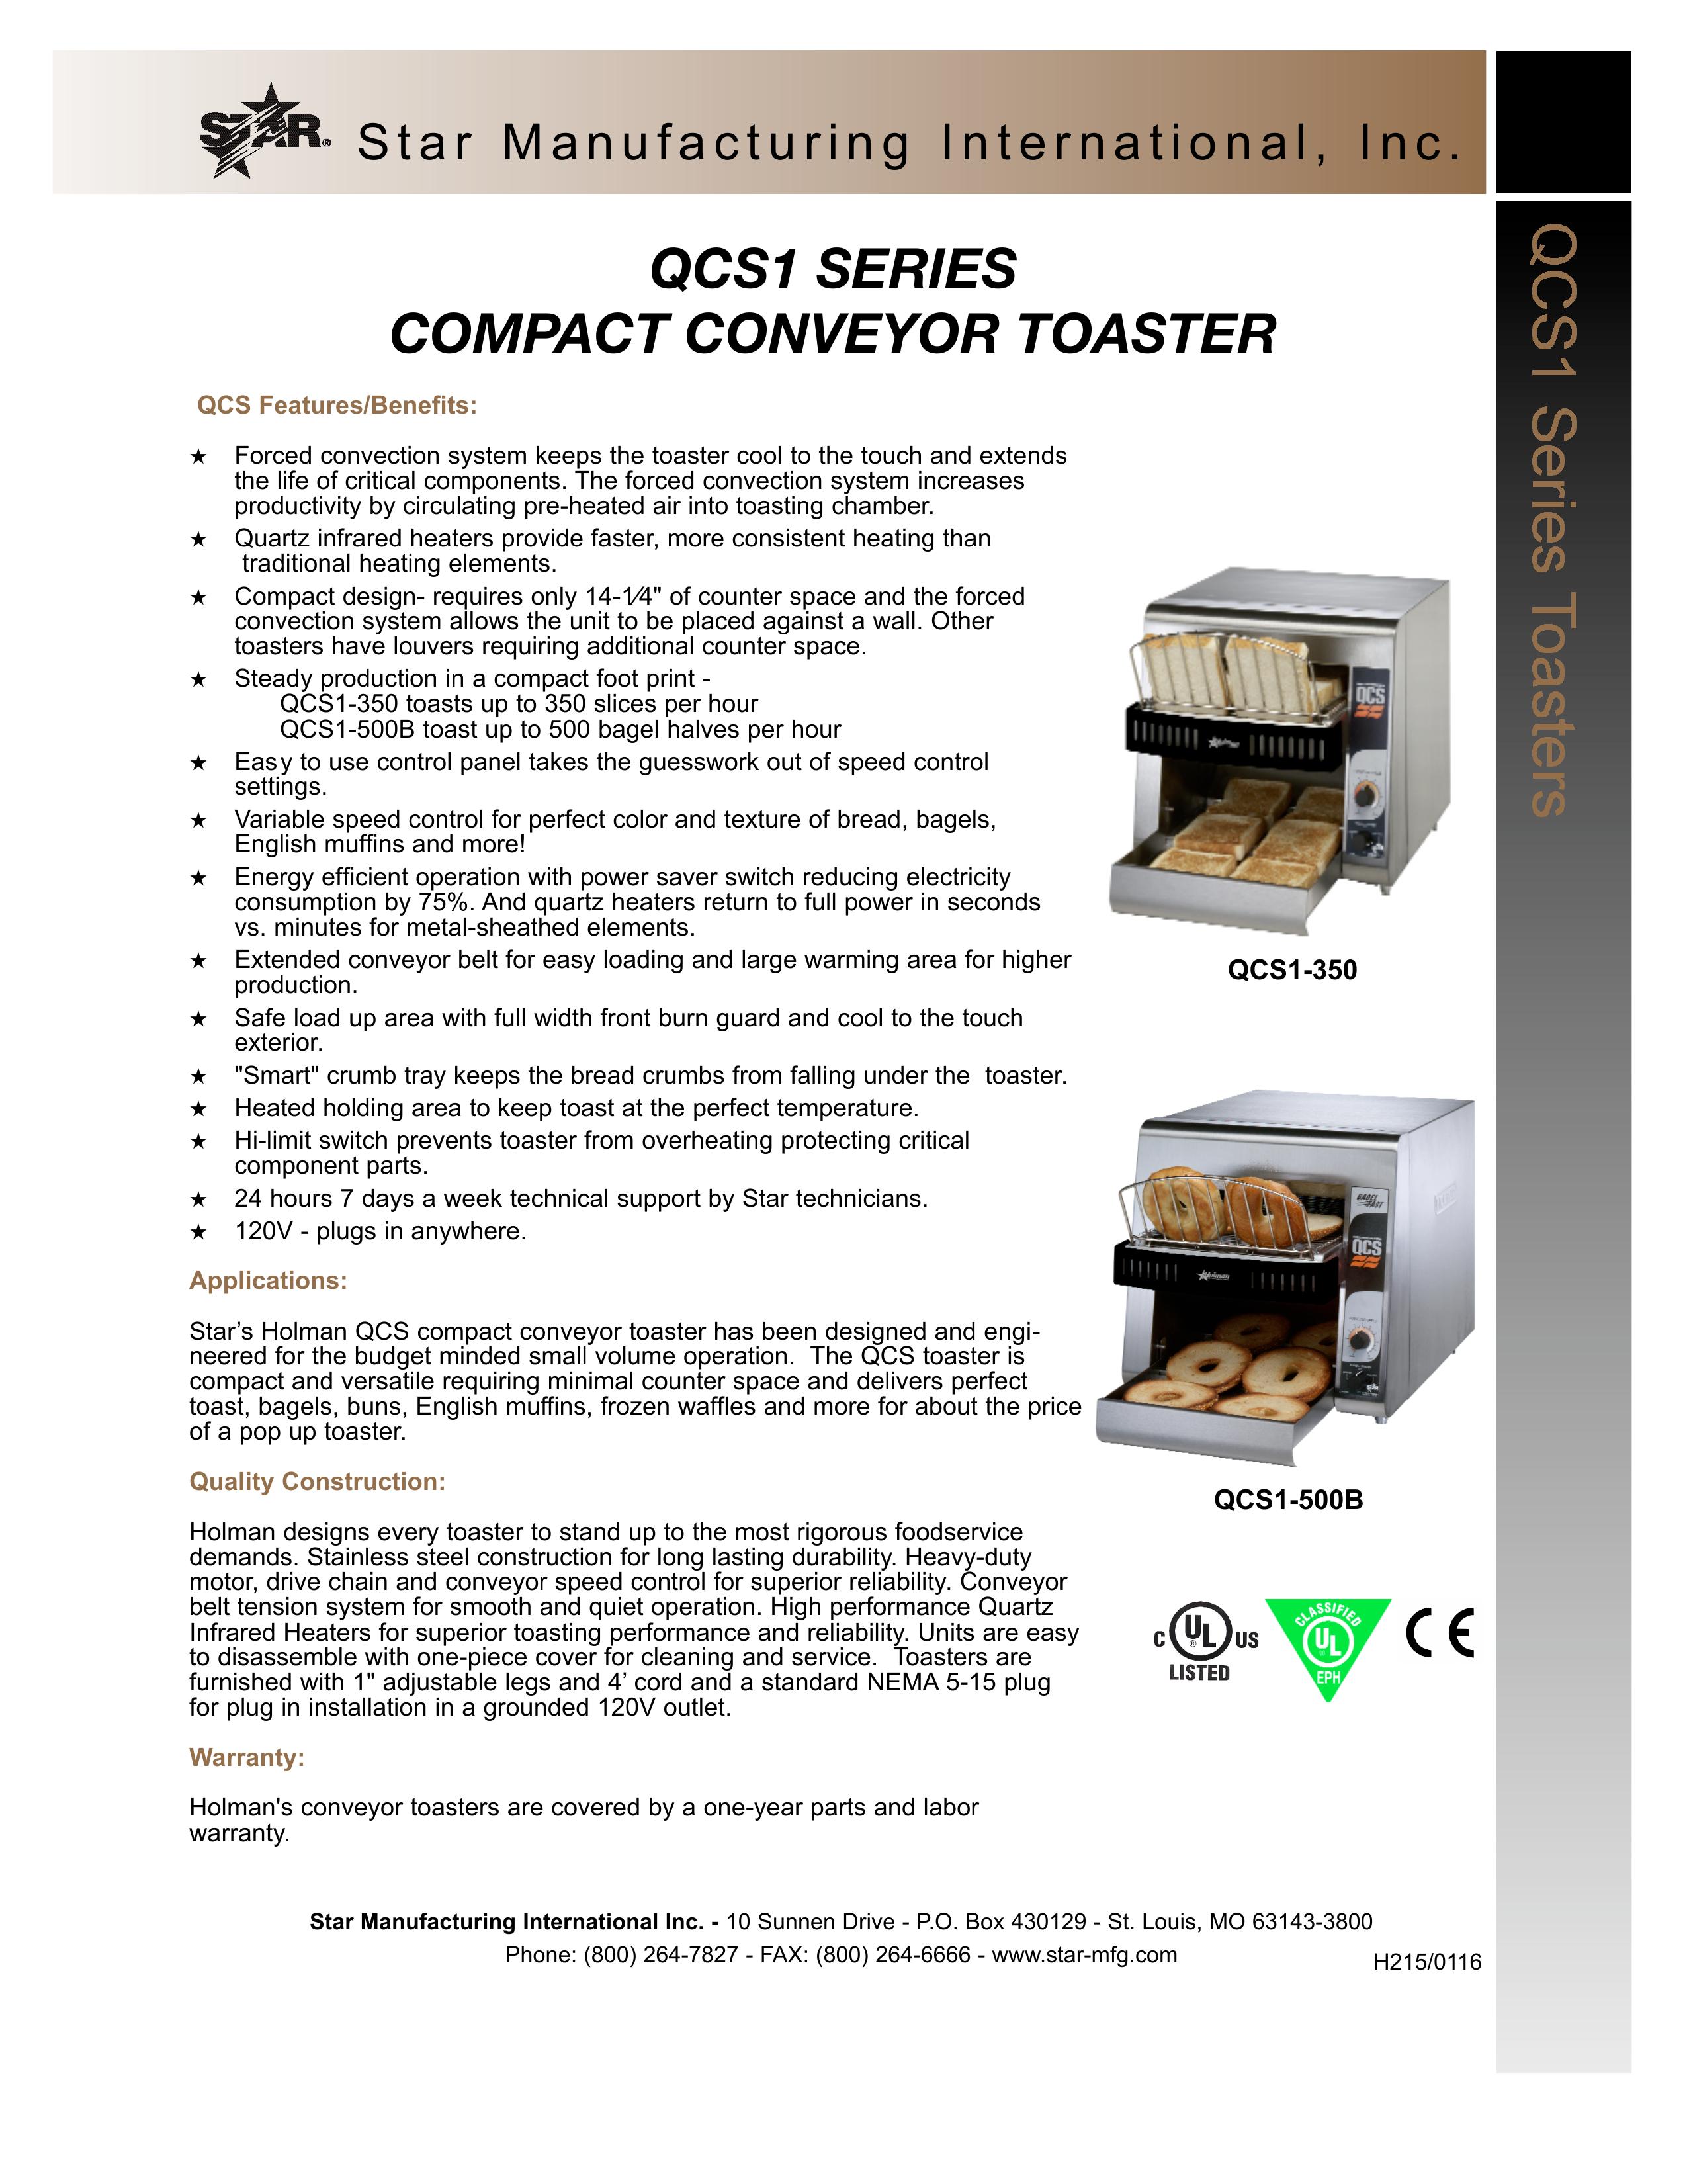 Star Manufacturing QCS1-350 Toaster User Manual